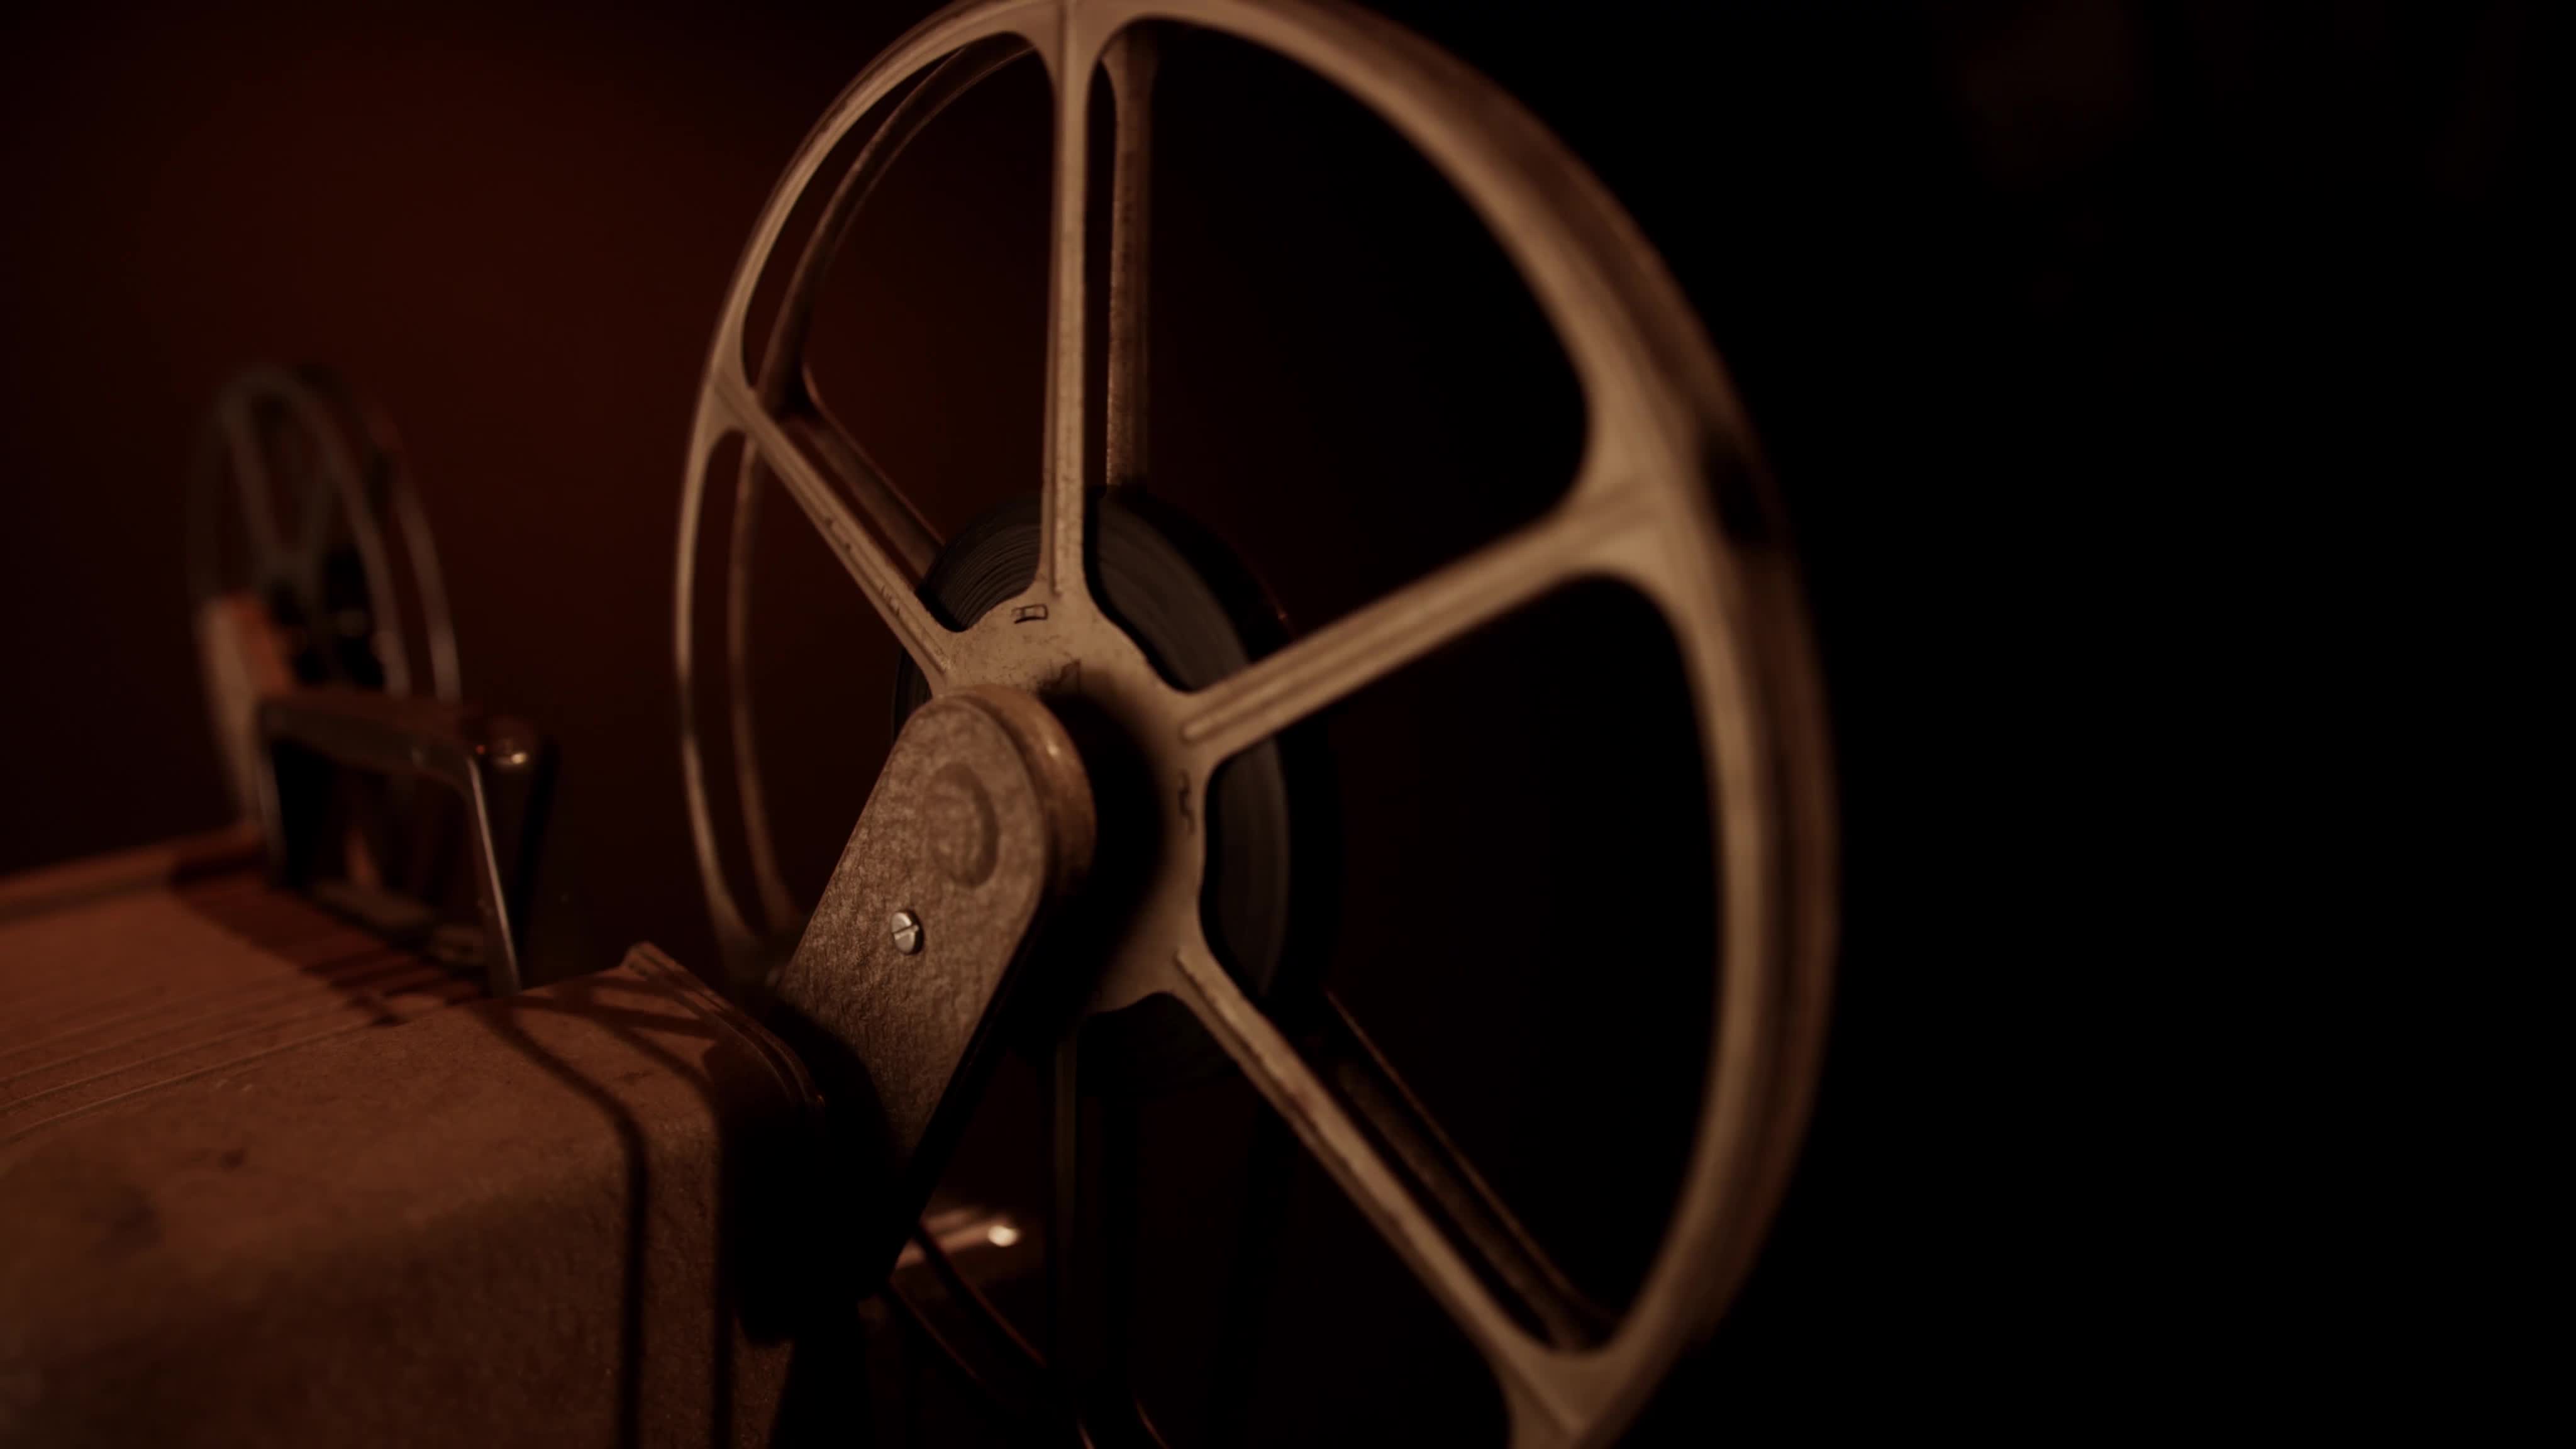 Traveling shot of rusty film reels spinning with dark illumination